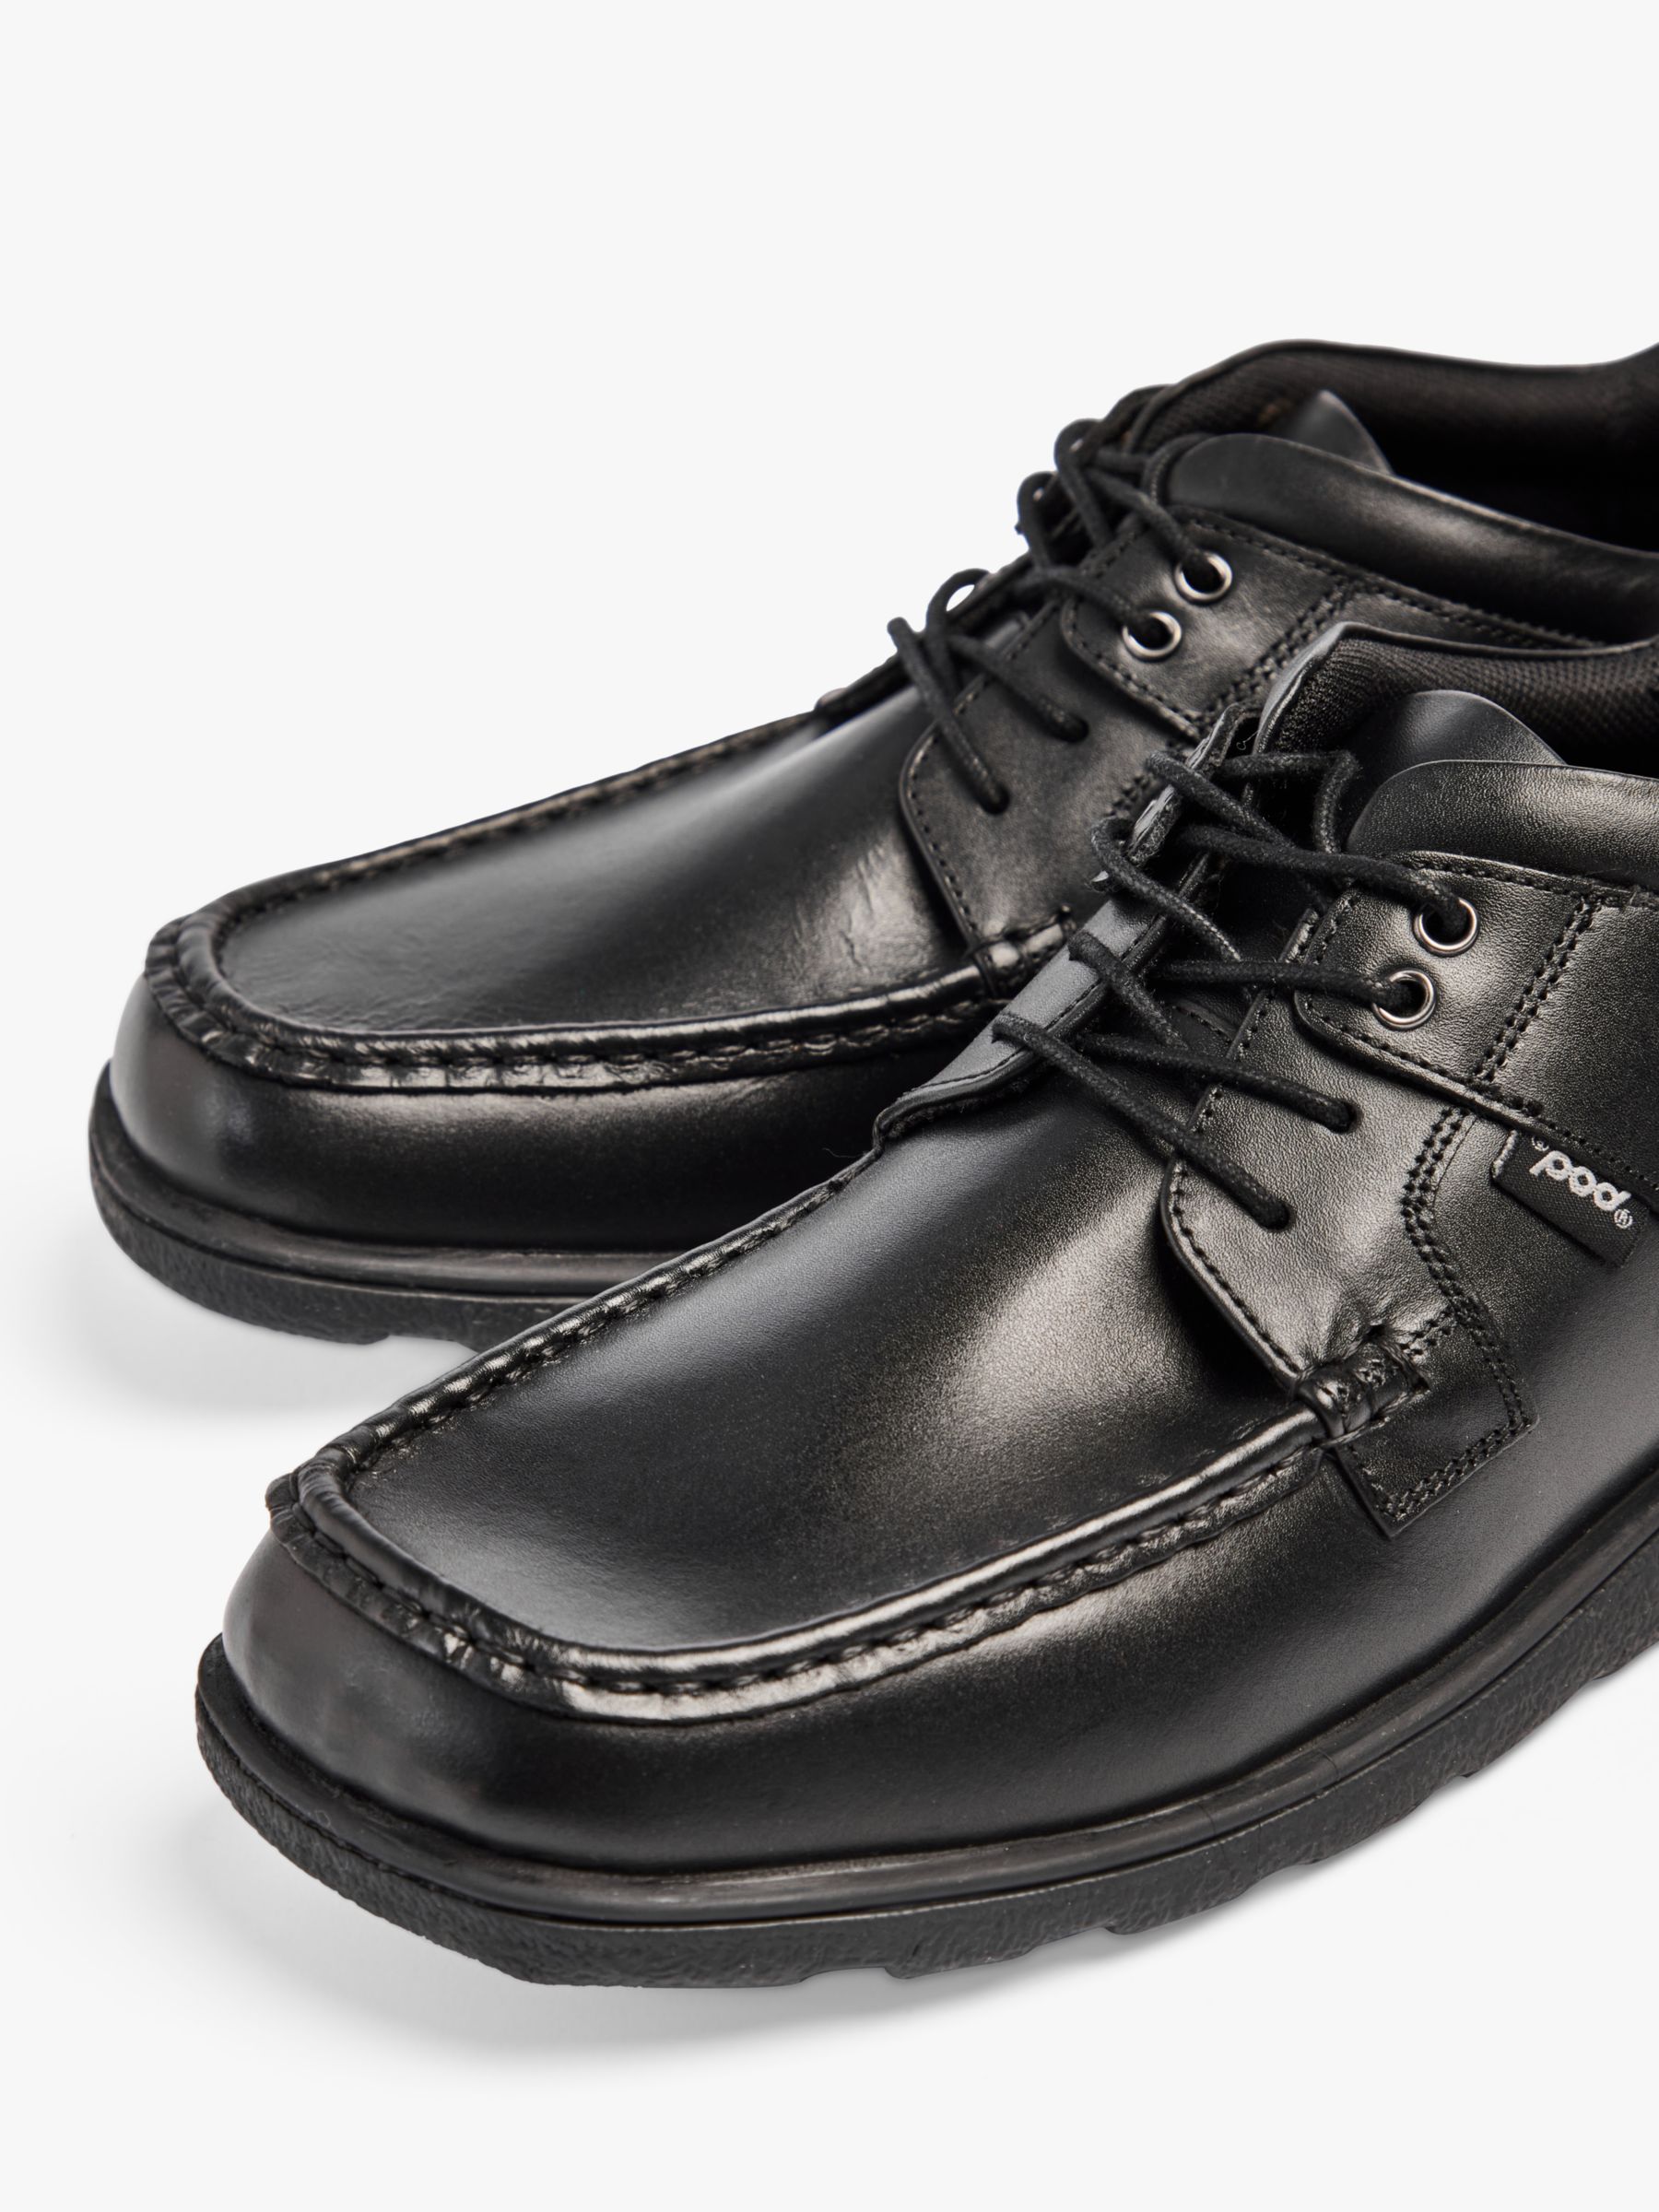 Pod Kids' Milo Lace Up Leather School Shoes, Black at John Lewis & Partners